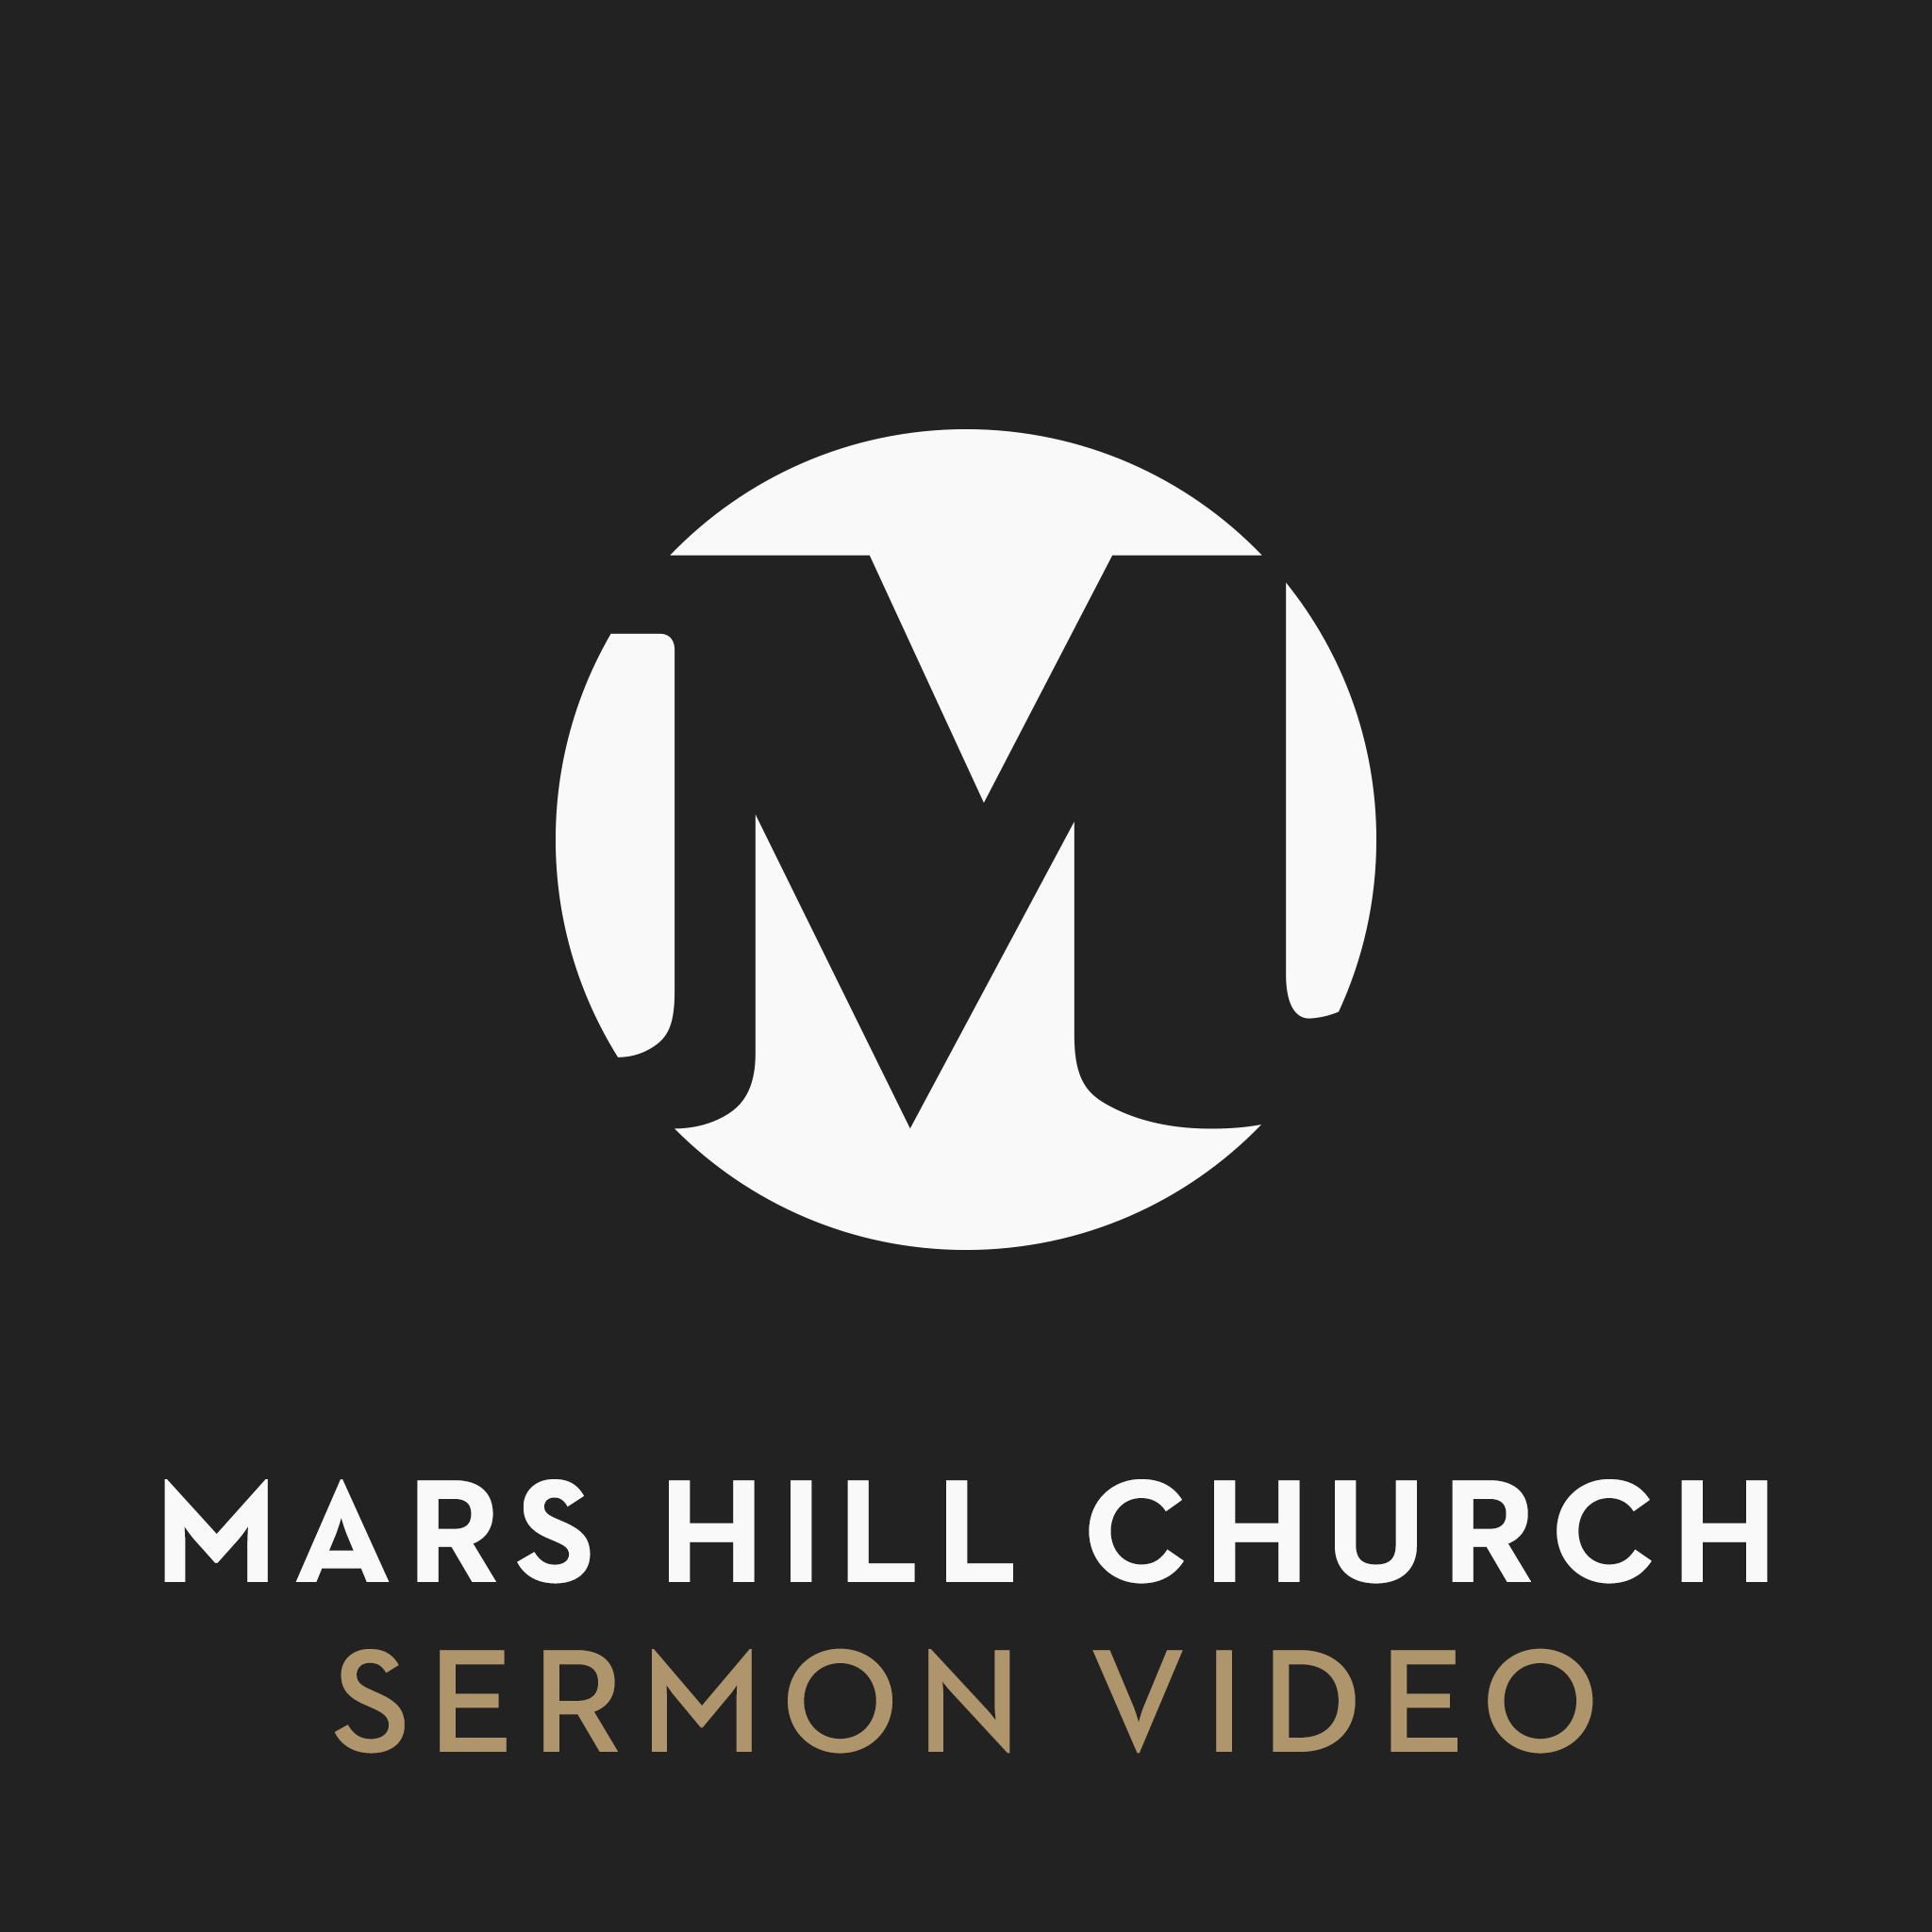 Mh_badge_sermon_video